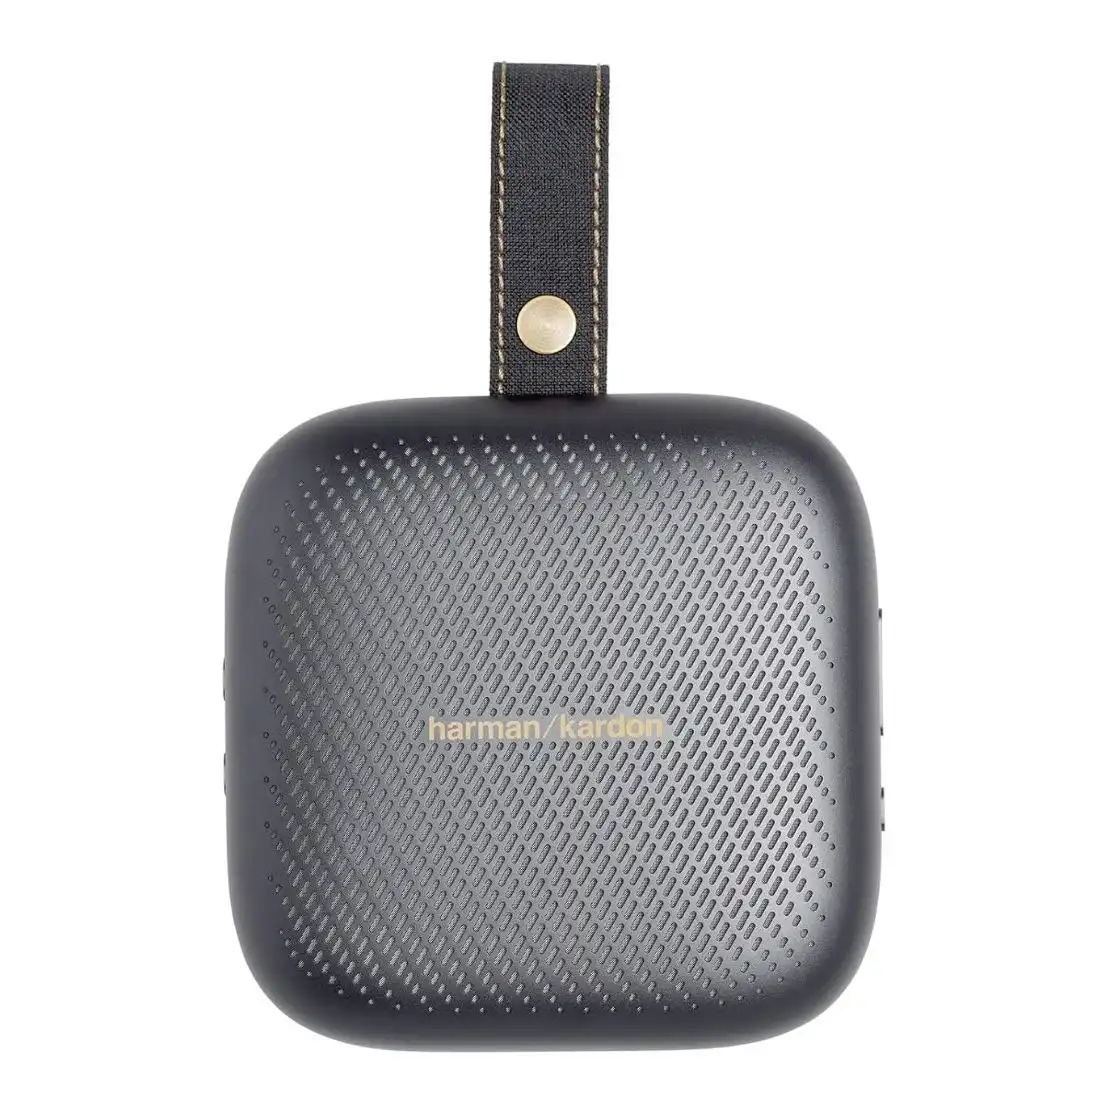 Harman Kardon NEO Portable Bluetooth Speaker Grey [Refurbished] - Excellent